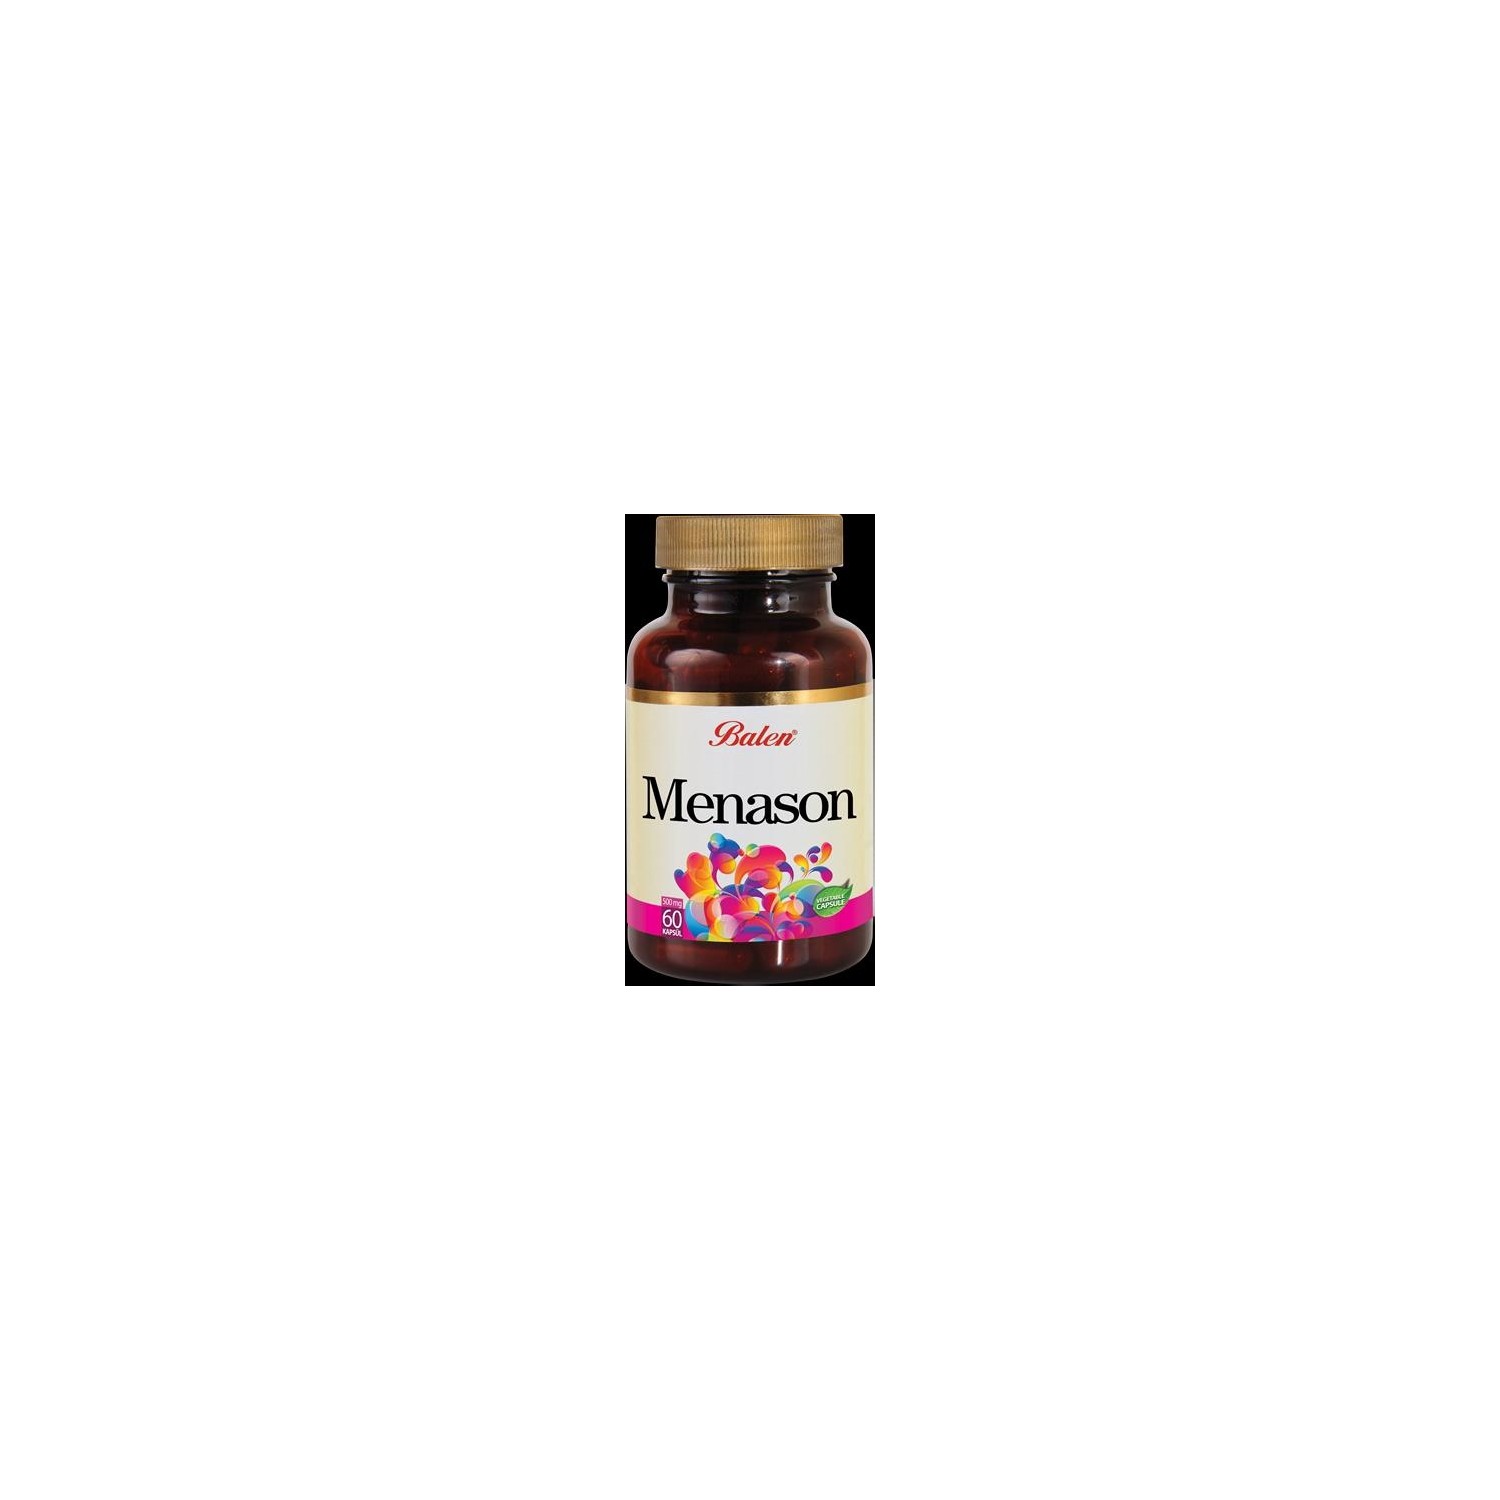 Активная добавка Balen менасон, 60 капсул, 520 мг kal астаксантин 5 мг 60 растительных капсул